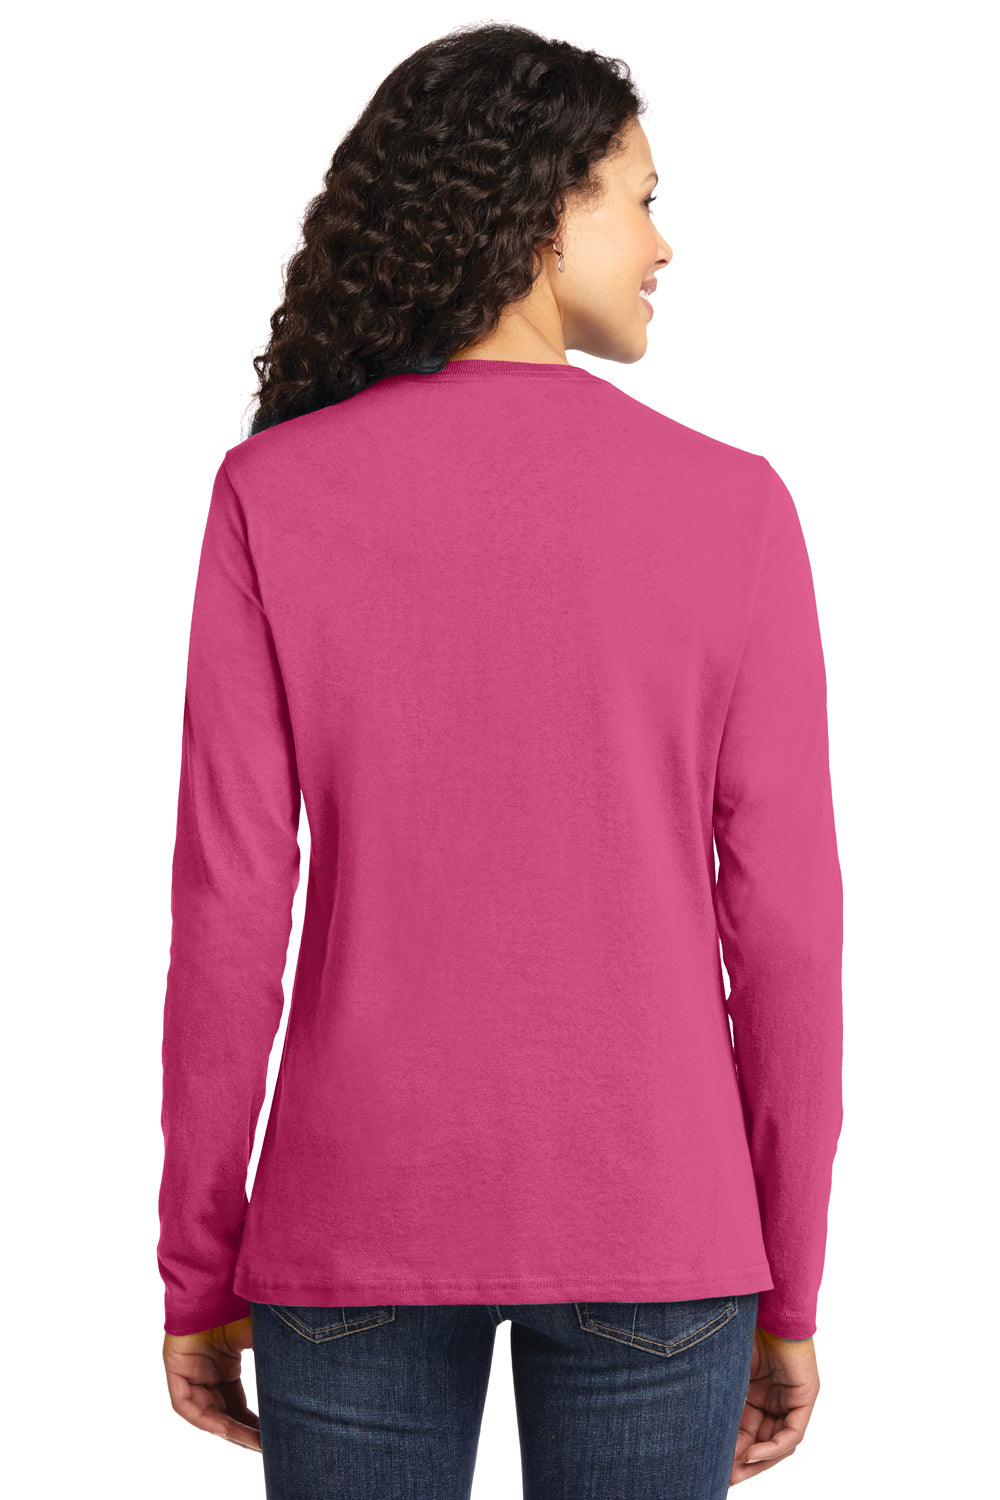 Port & Company LPC54LS Womens Core Long Sleeve Crewneck T-Shirt Sangria Pink Back